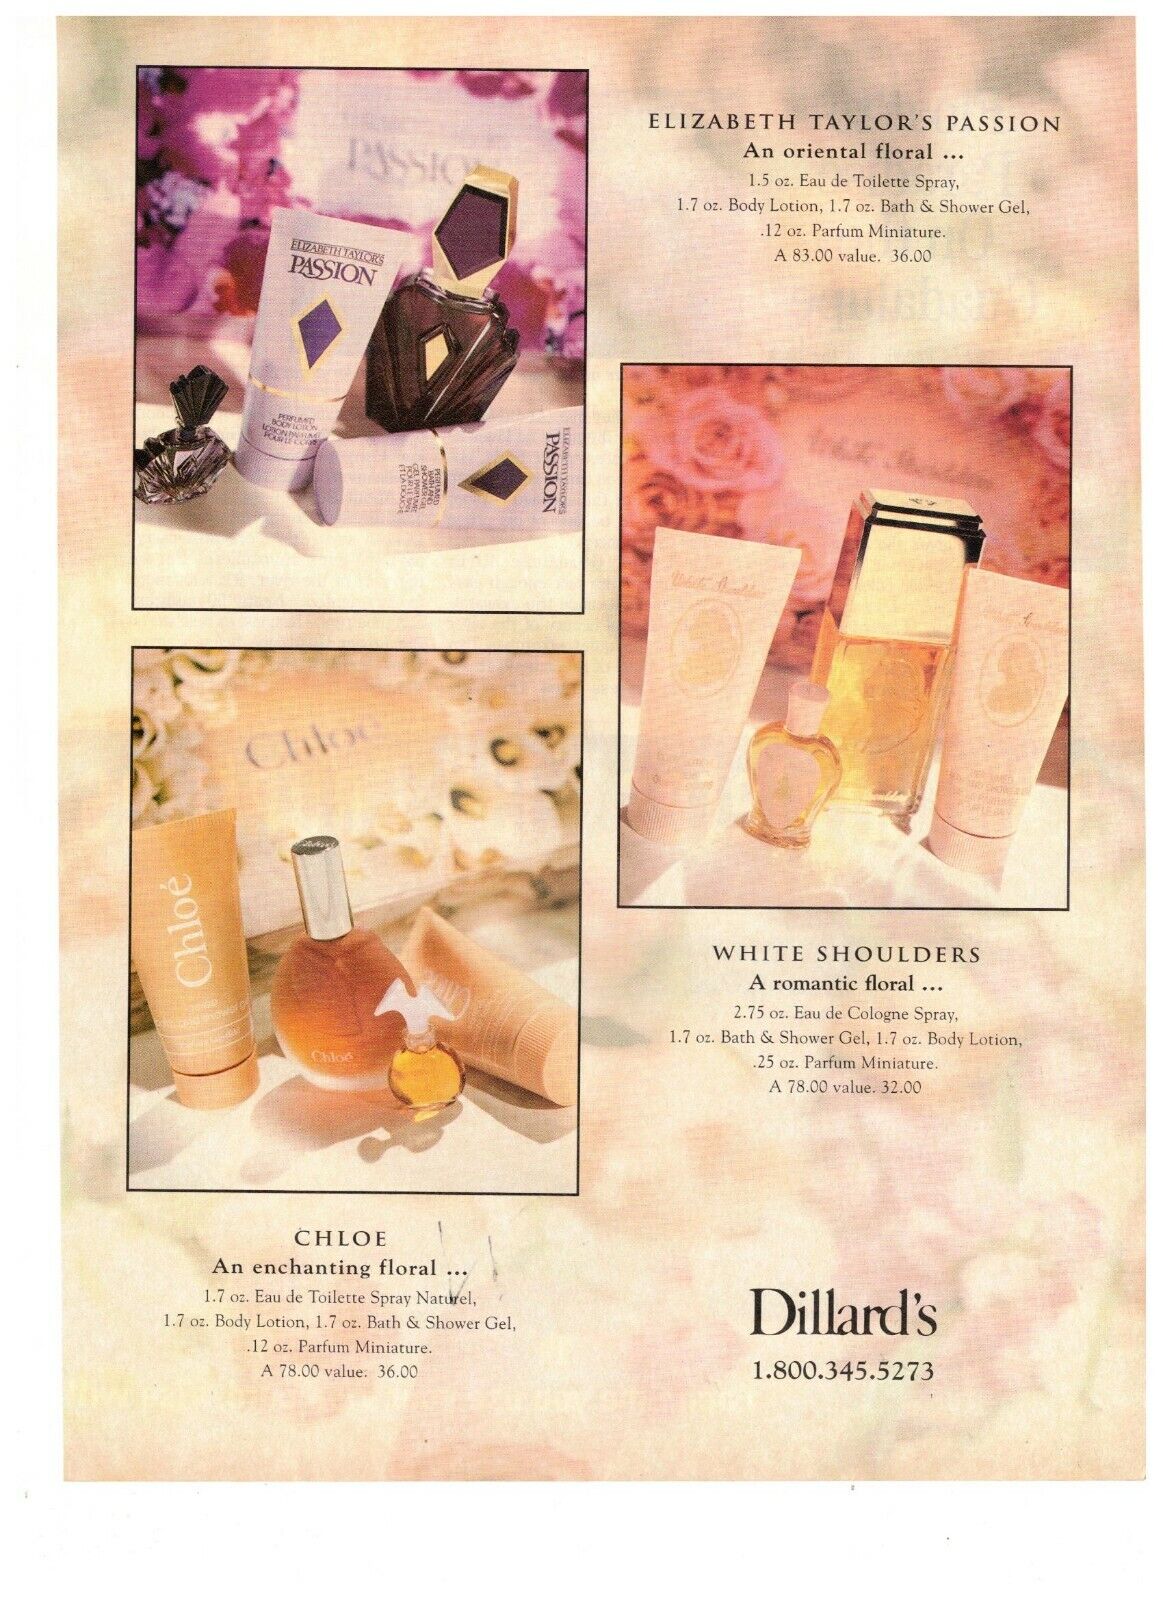 Dillards Chloe Elizabeth Taylor Passion Enchanting Floral Vintage 1993 Print Ad